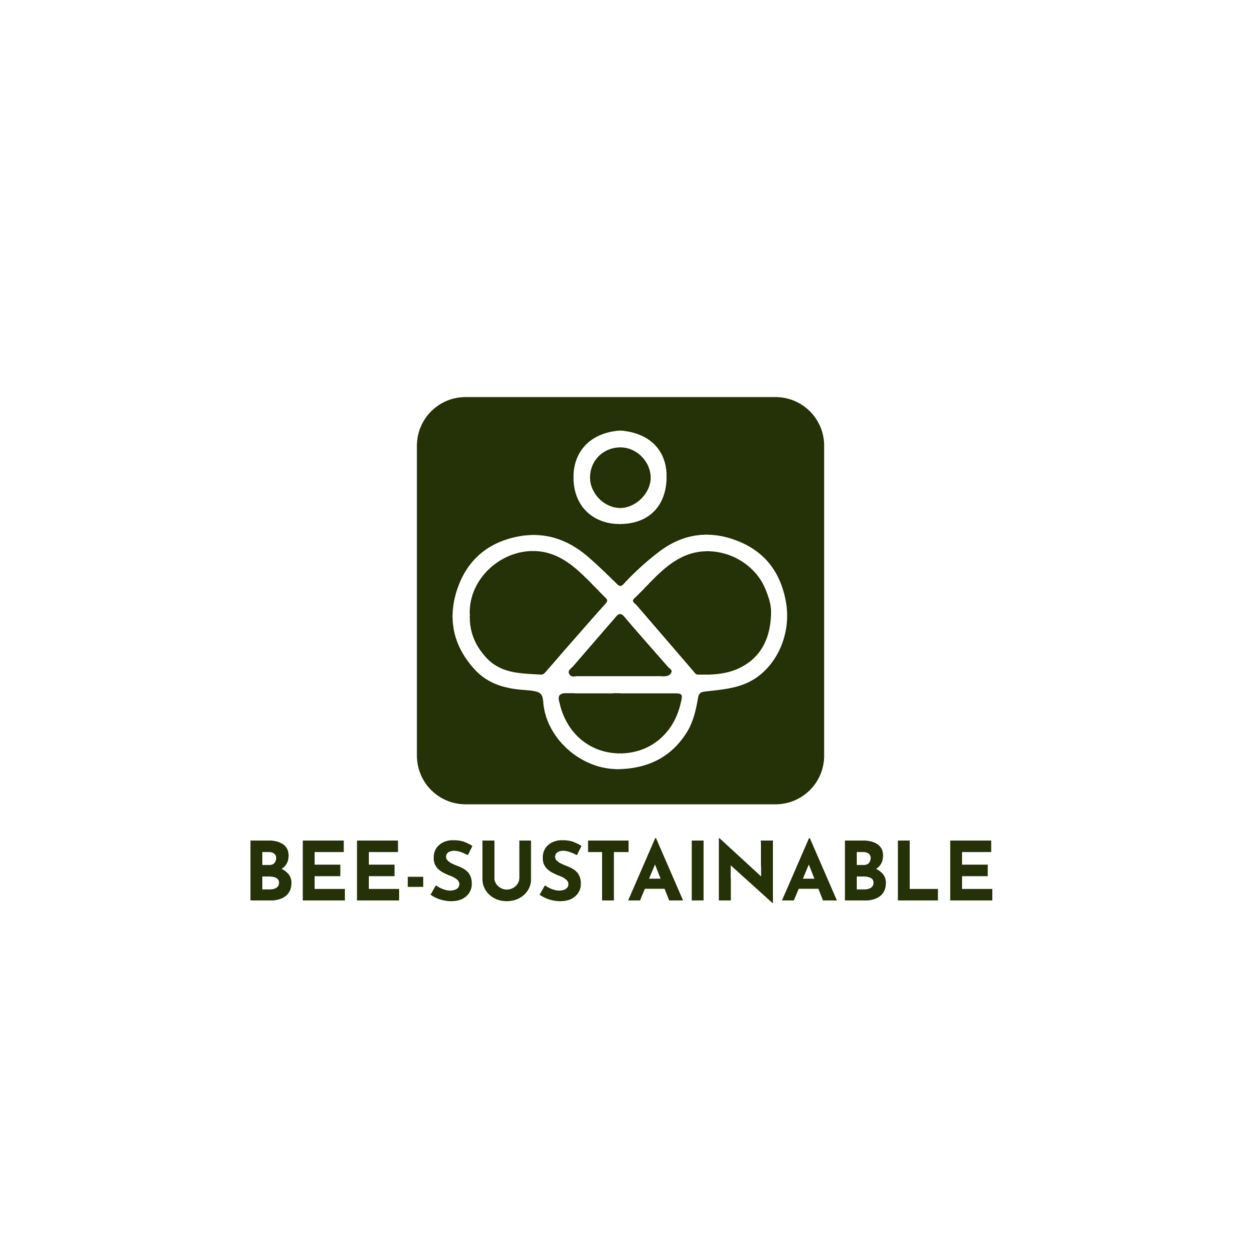 Bee-Sustainable